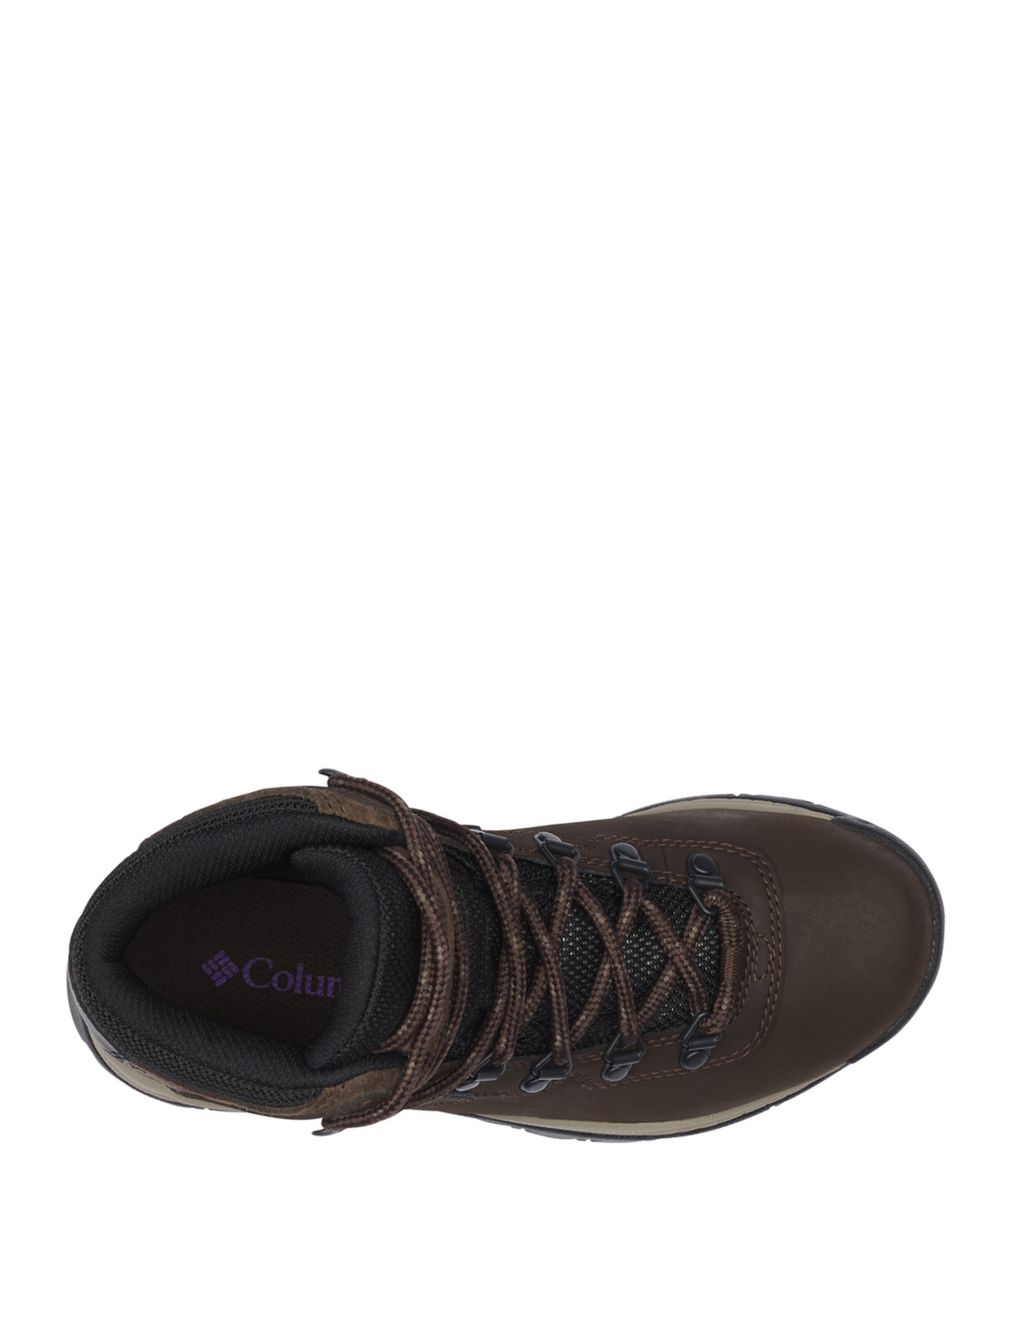 Newton Ridge Plus Leather Walking Boots image 5